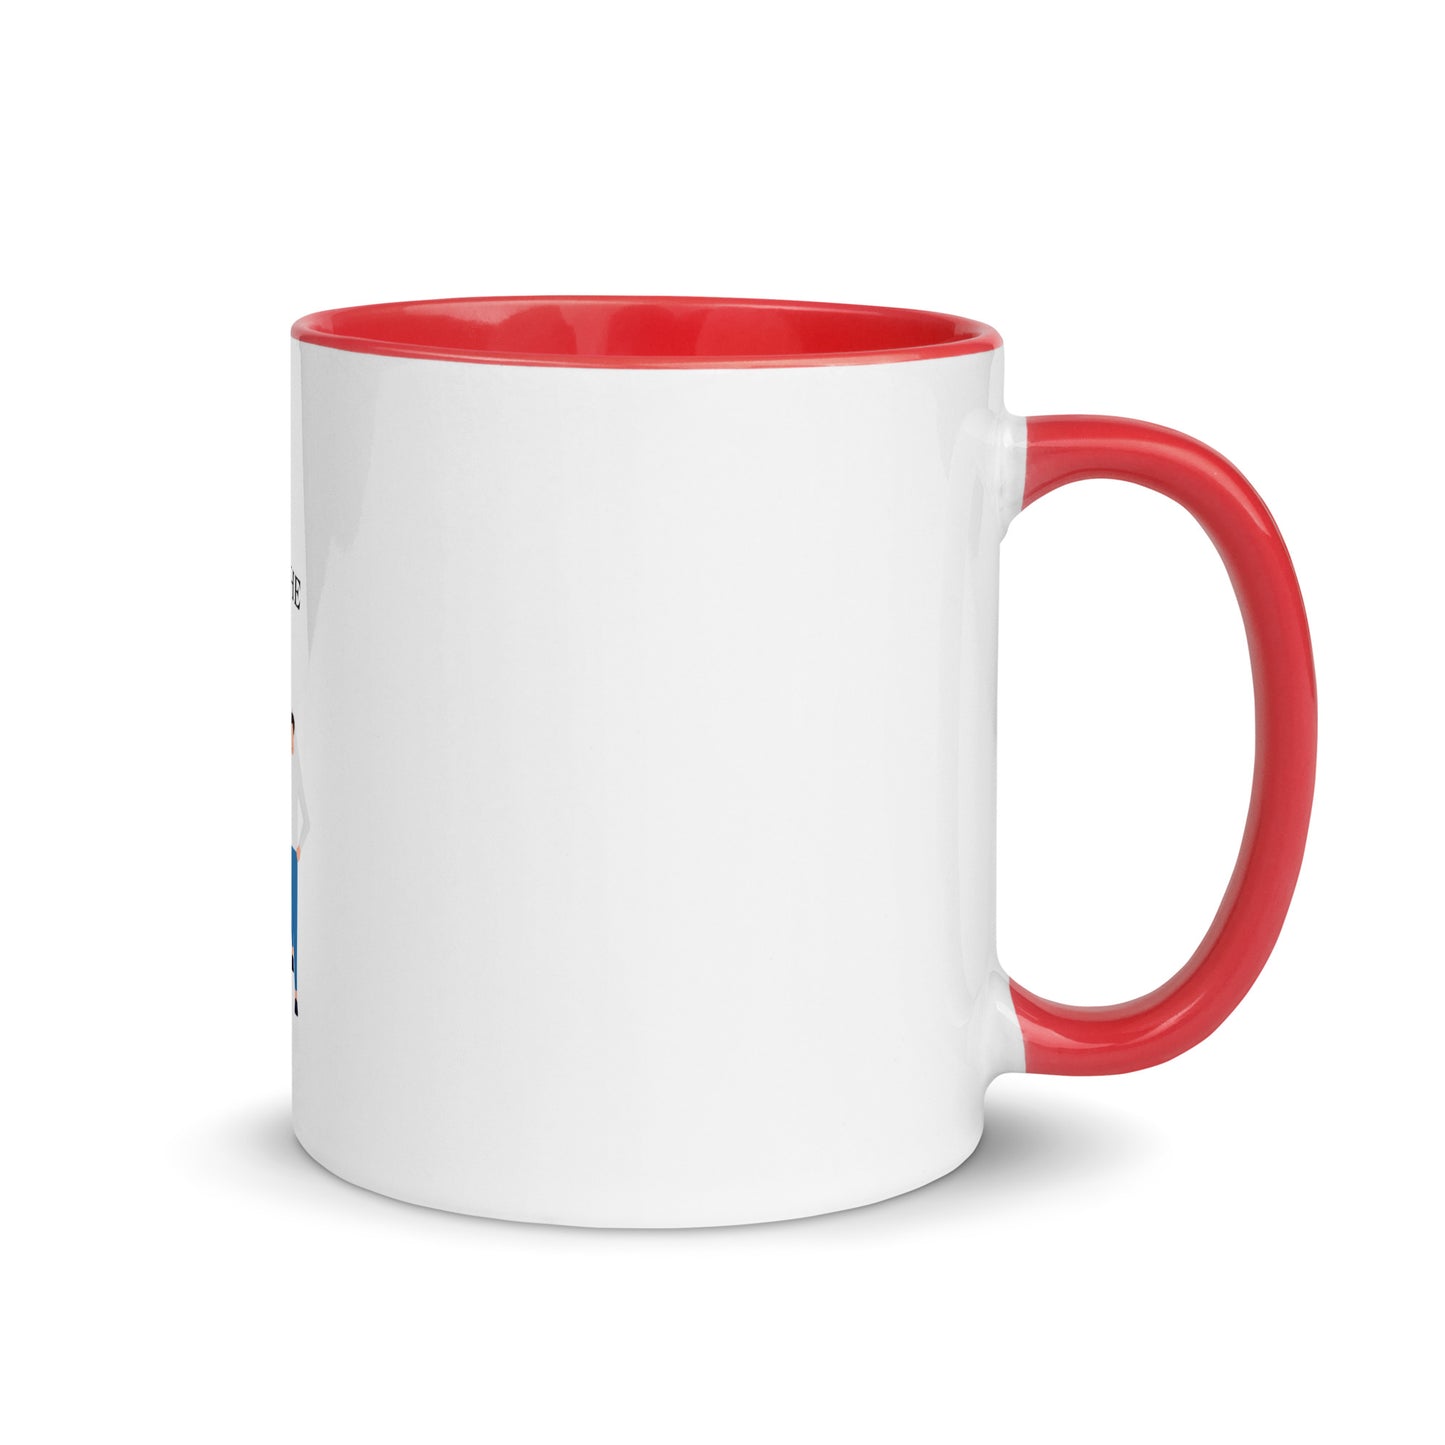 A Winning Mug with Color Inside